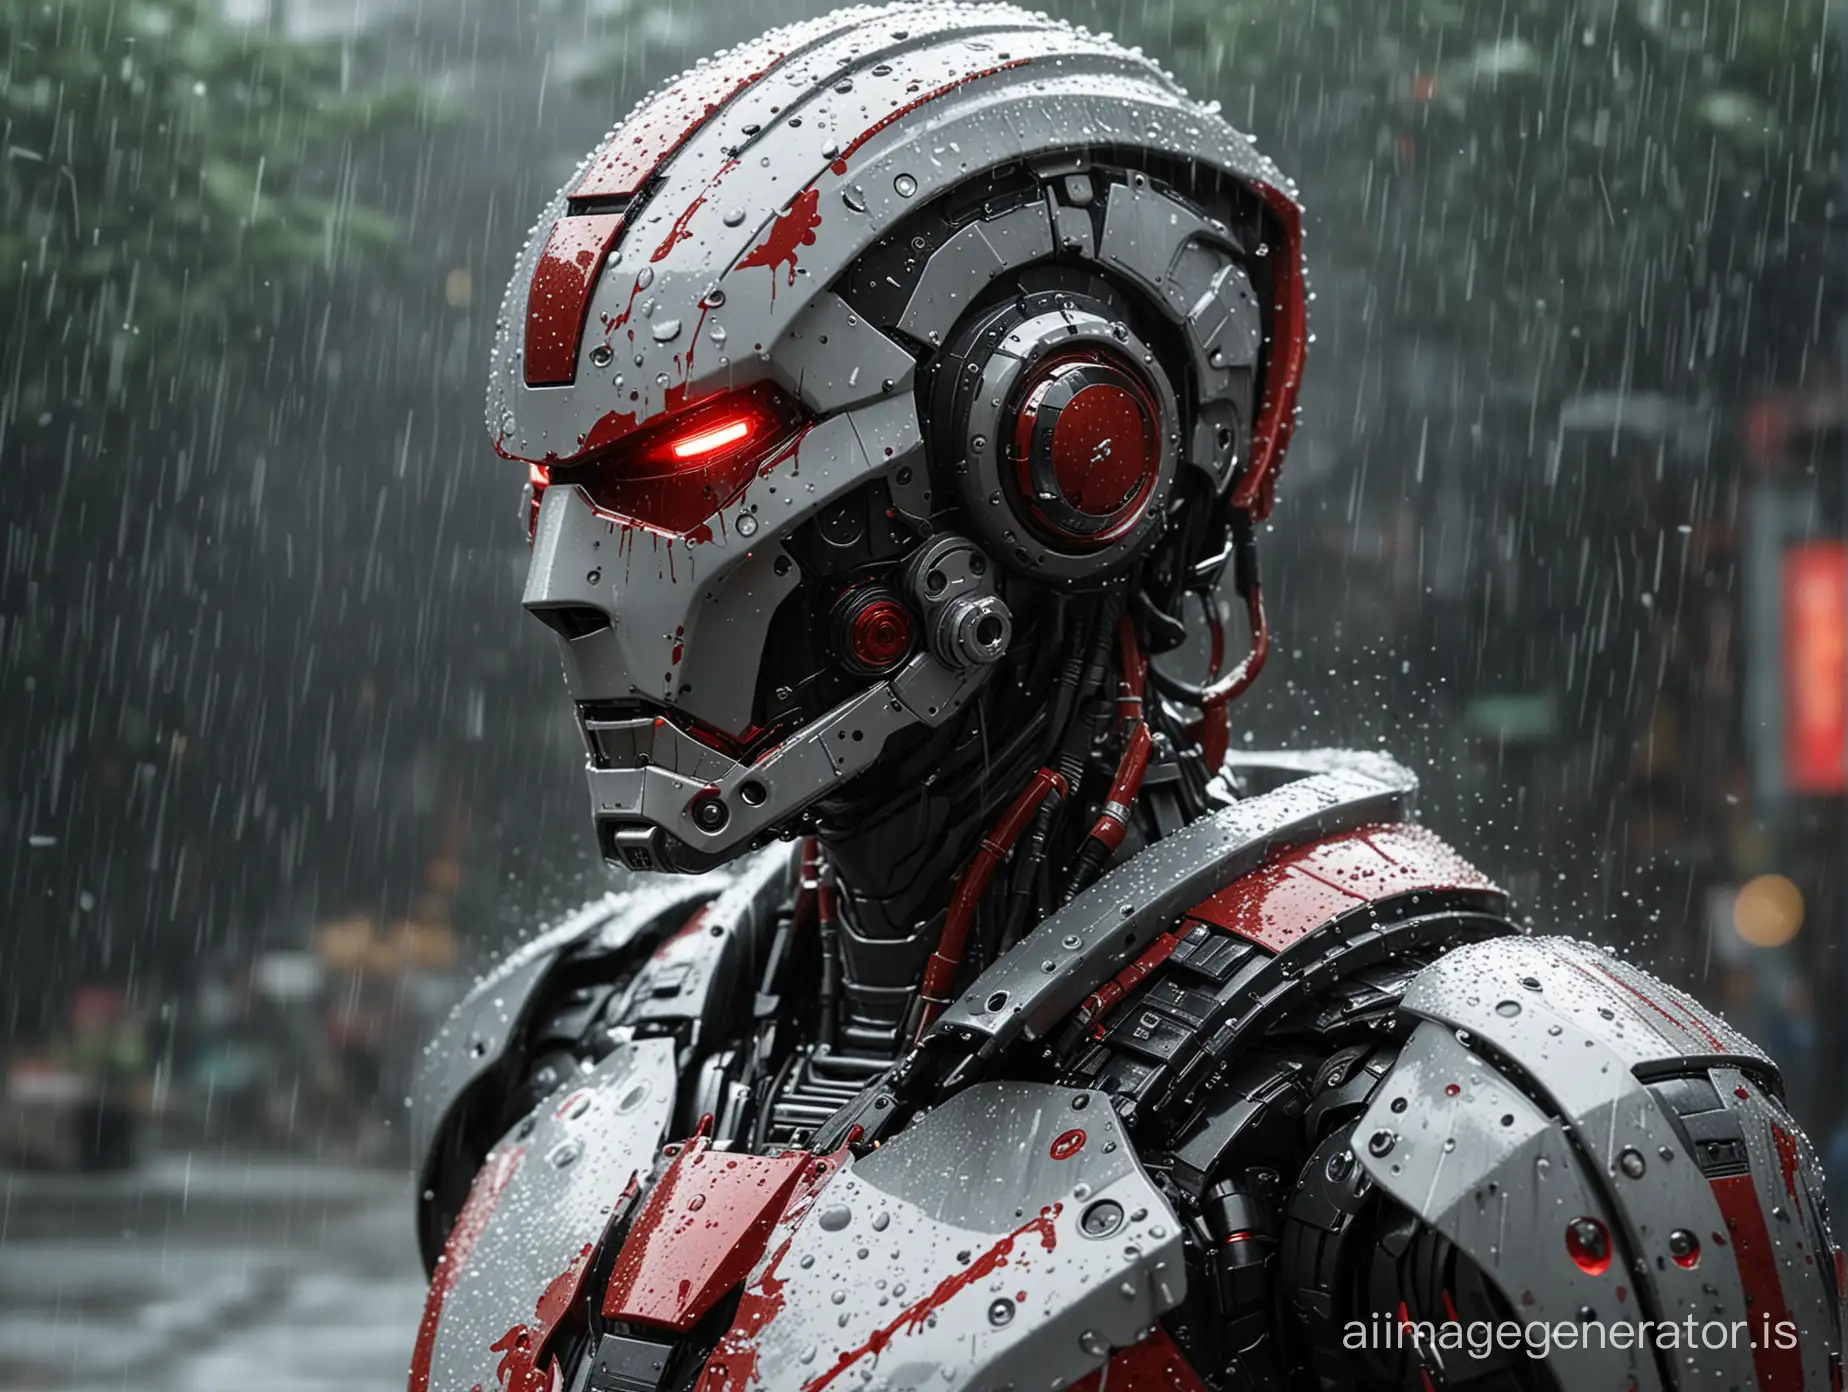 Futuristic-Armor-in-Rainy-Urban-Setting-A-Modern-Warriors-Portrait